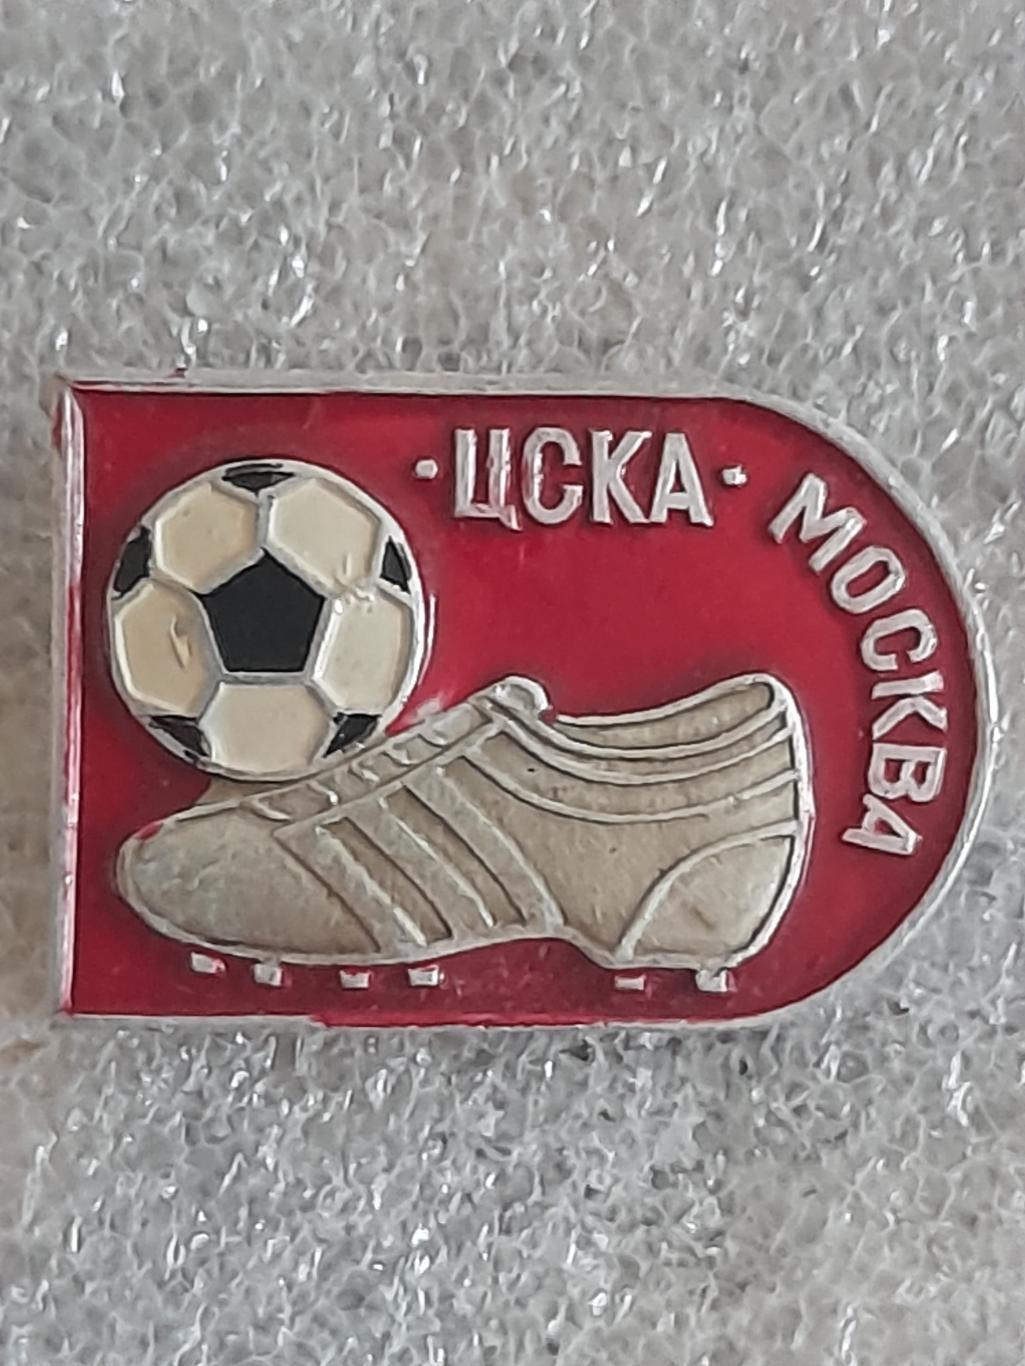 ФК ЦСКА, Москва (Россия)/ FC CSKA, Moscow, Russia